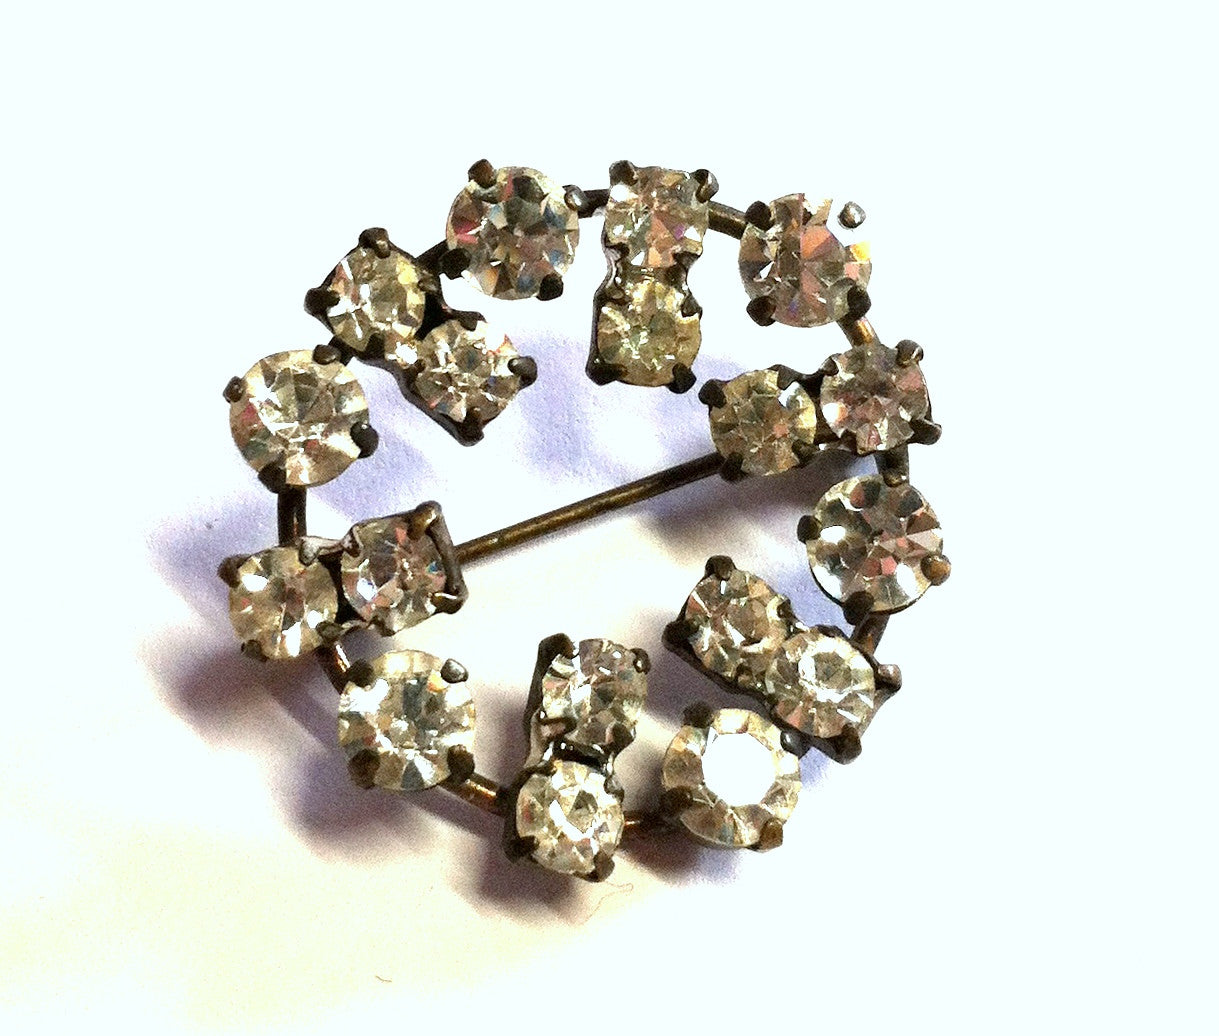 Sparkling Rhinestone Wreath Mini Brooch circa 1950s Dorothea's Closet Vintage Jewelry 